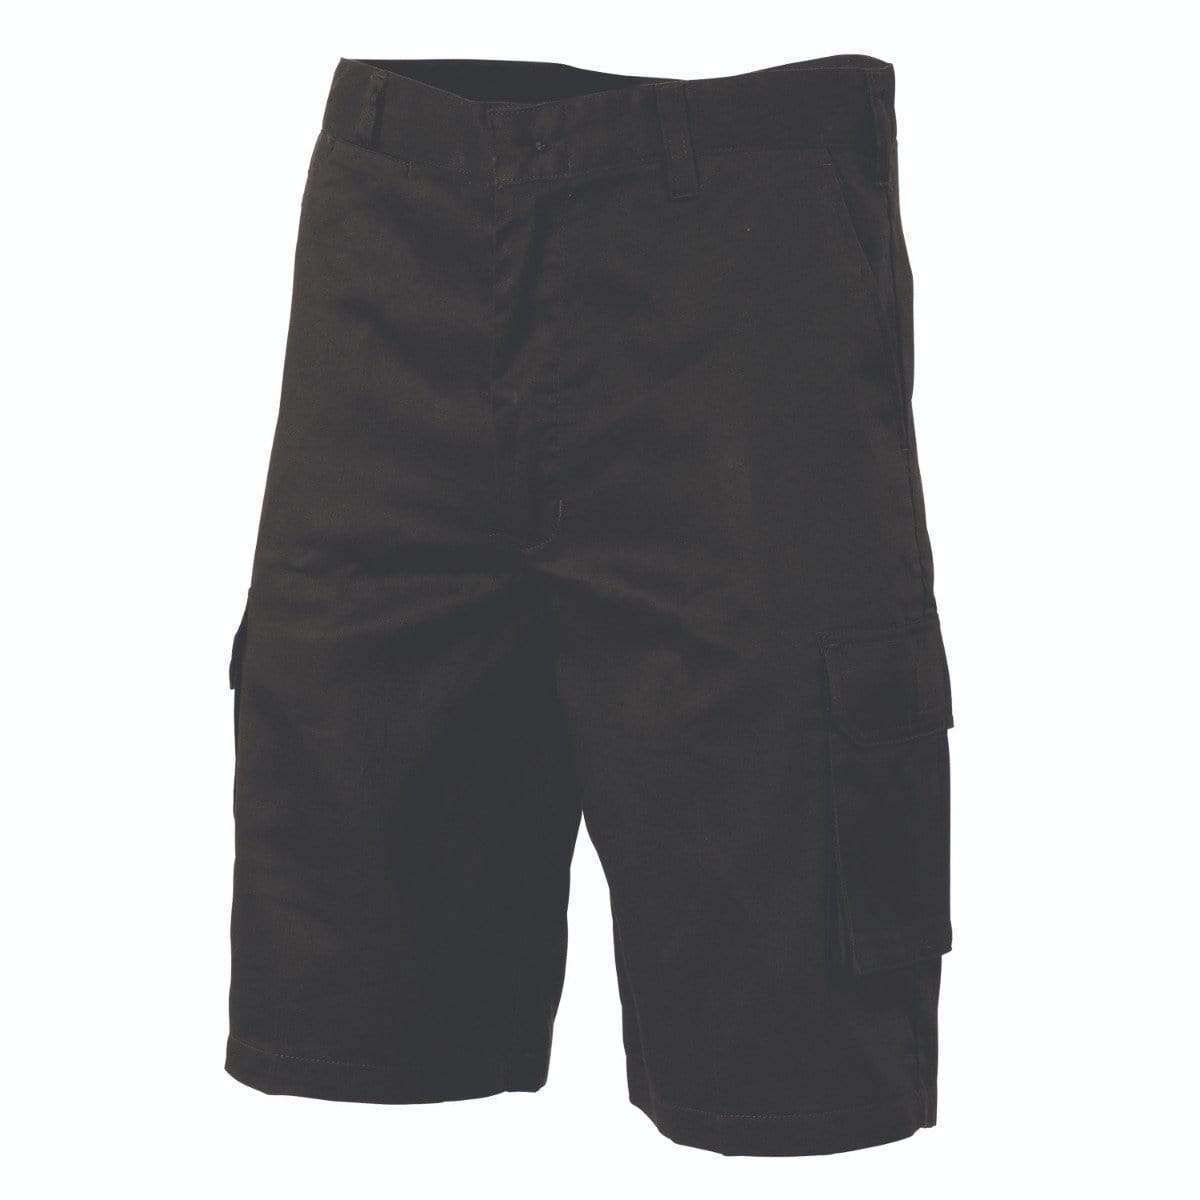 Dnc Workwear Lightweight Cool-breeze Cotton Cargo Shorts - 3304 Work Wear DNC Workwear Black 72R 